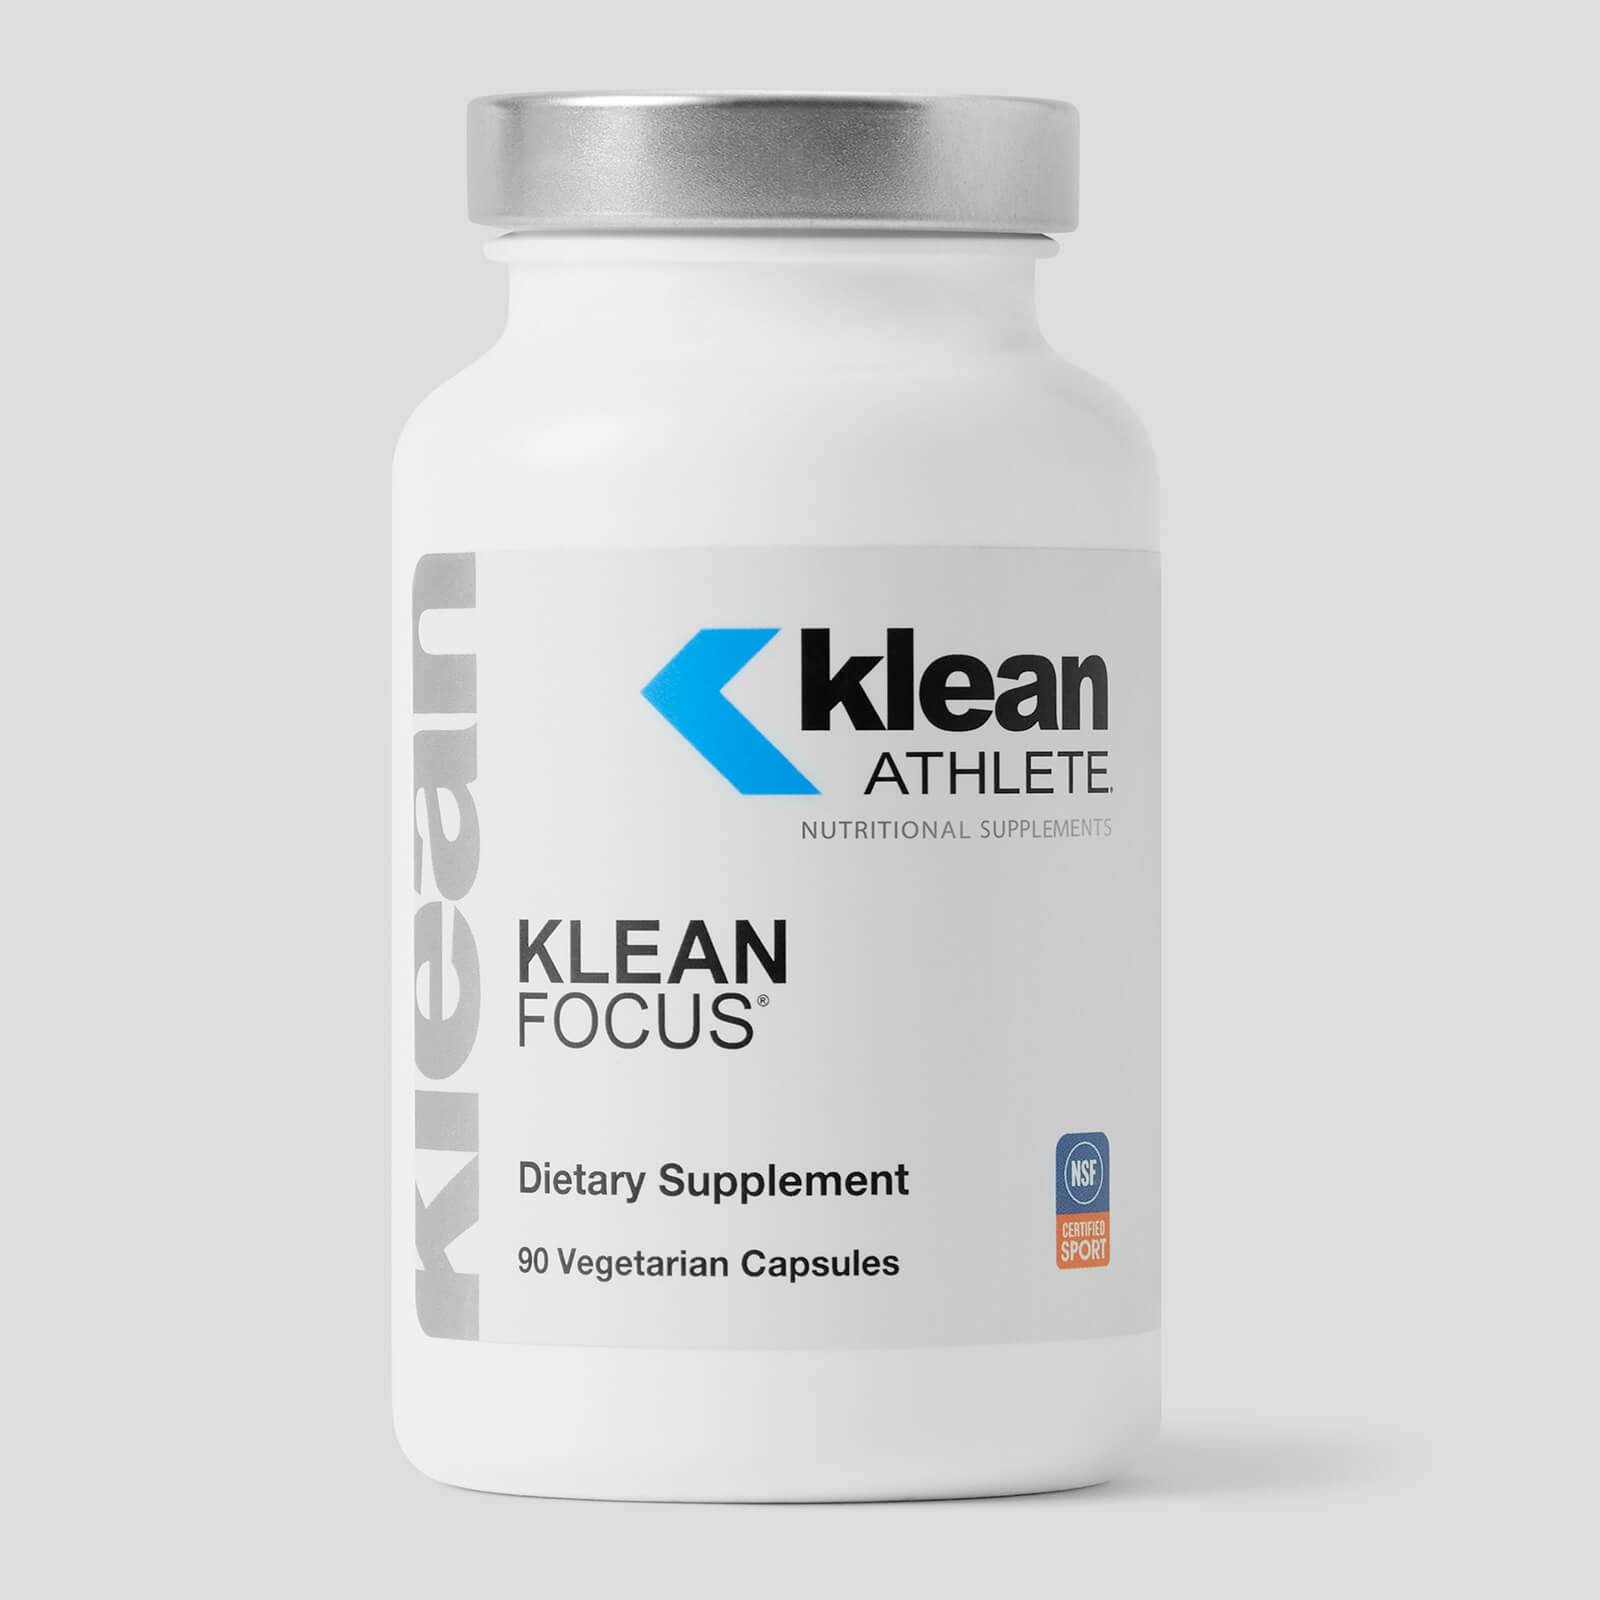 Klean Athlete Nutritional Supplement - 90 Vegetarian Capsules